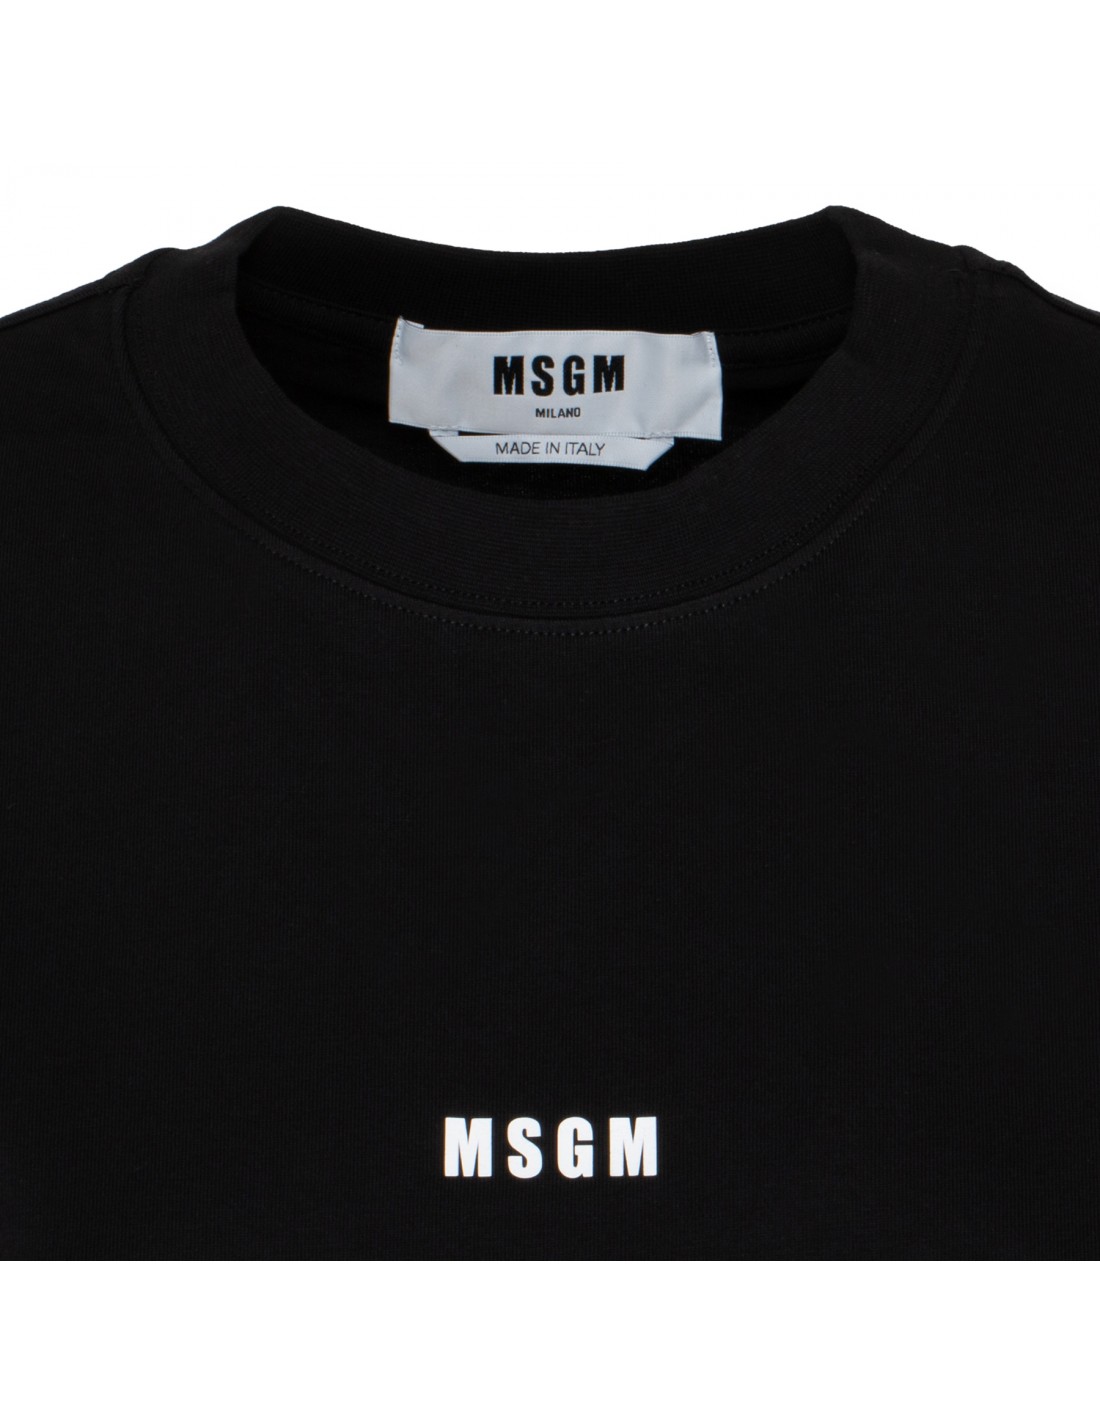 Micro logo black T-shirt